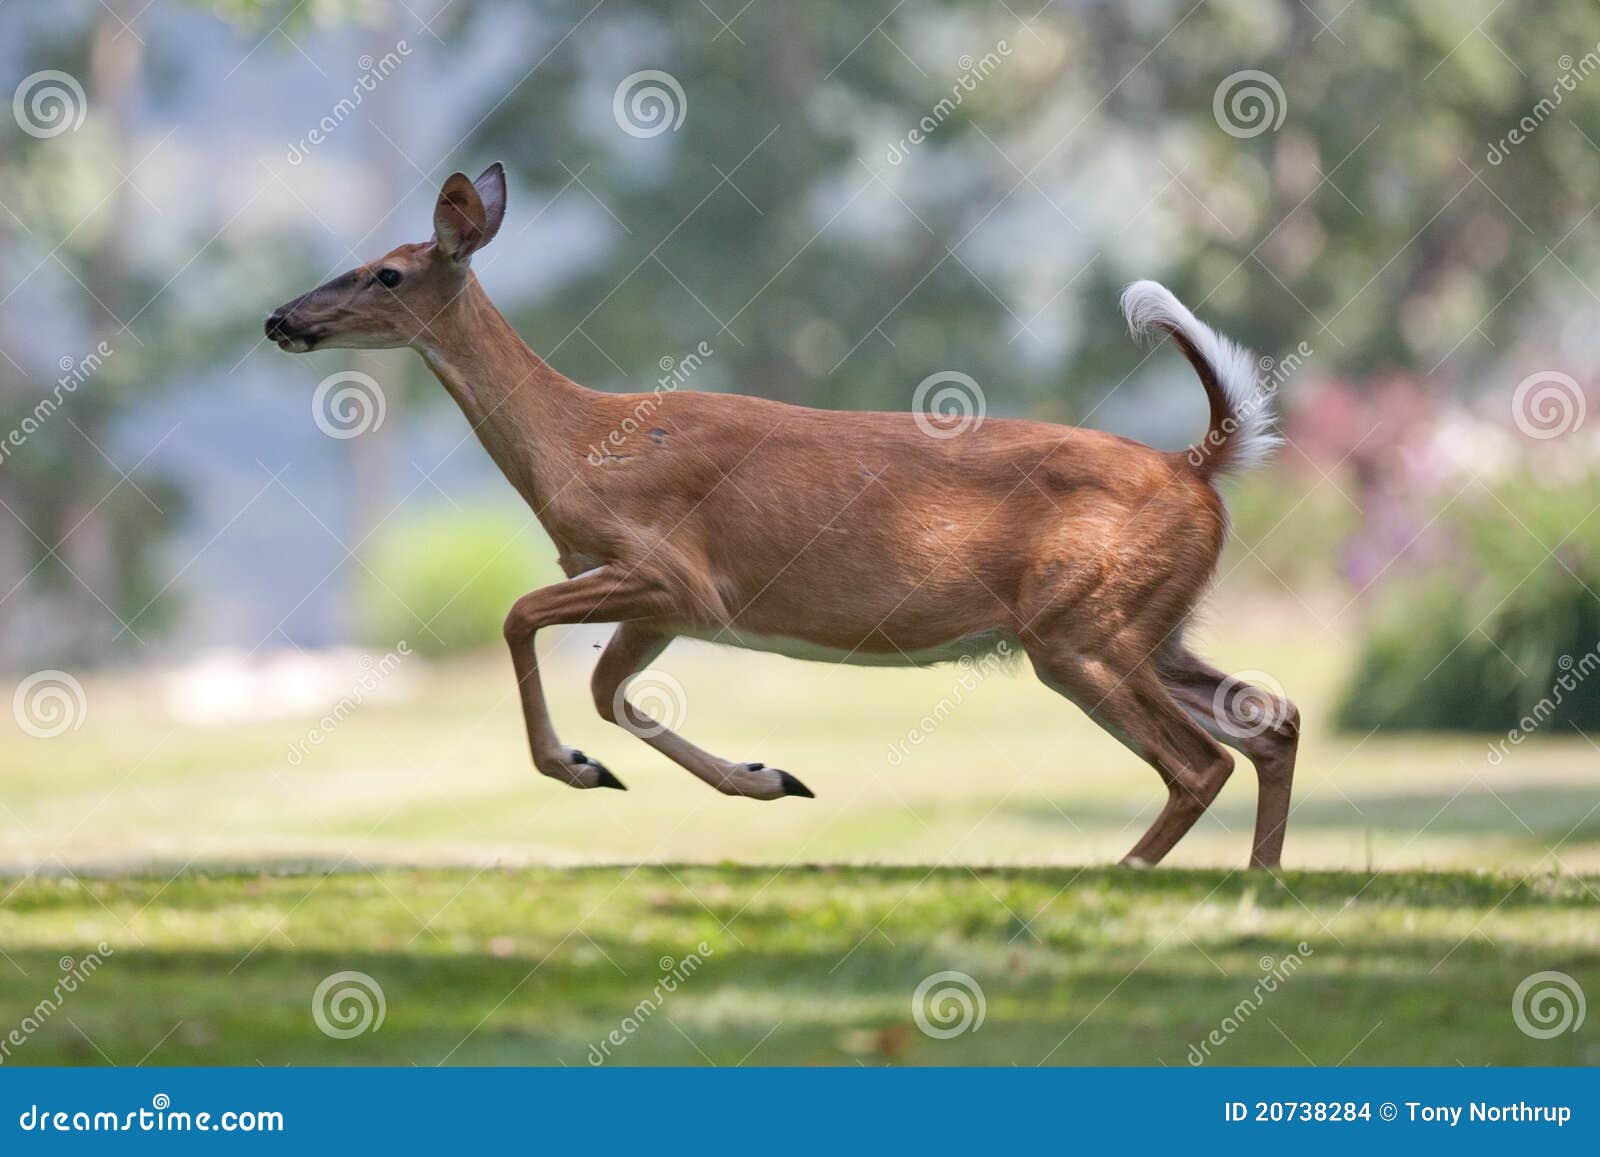 white-tailed deer in neighborhood leaping